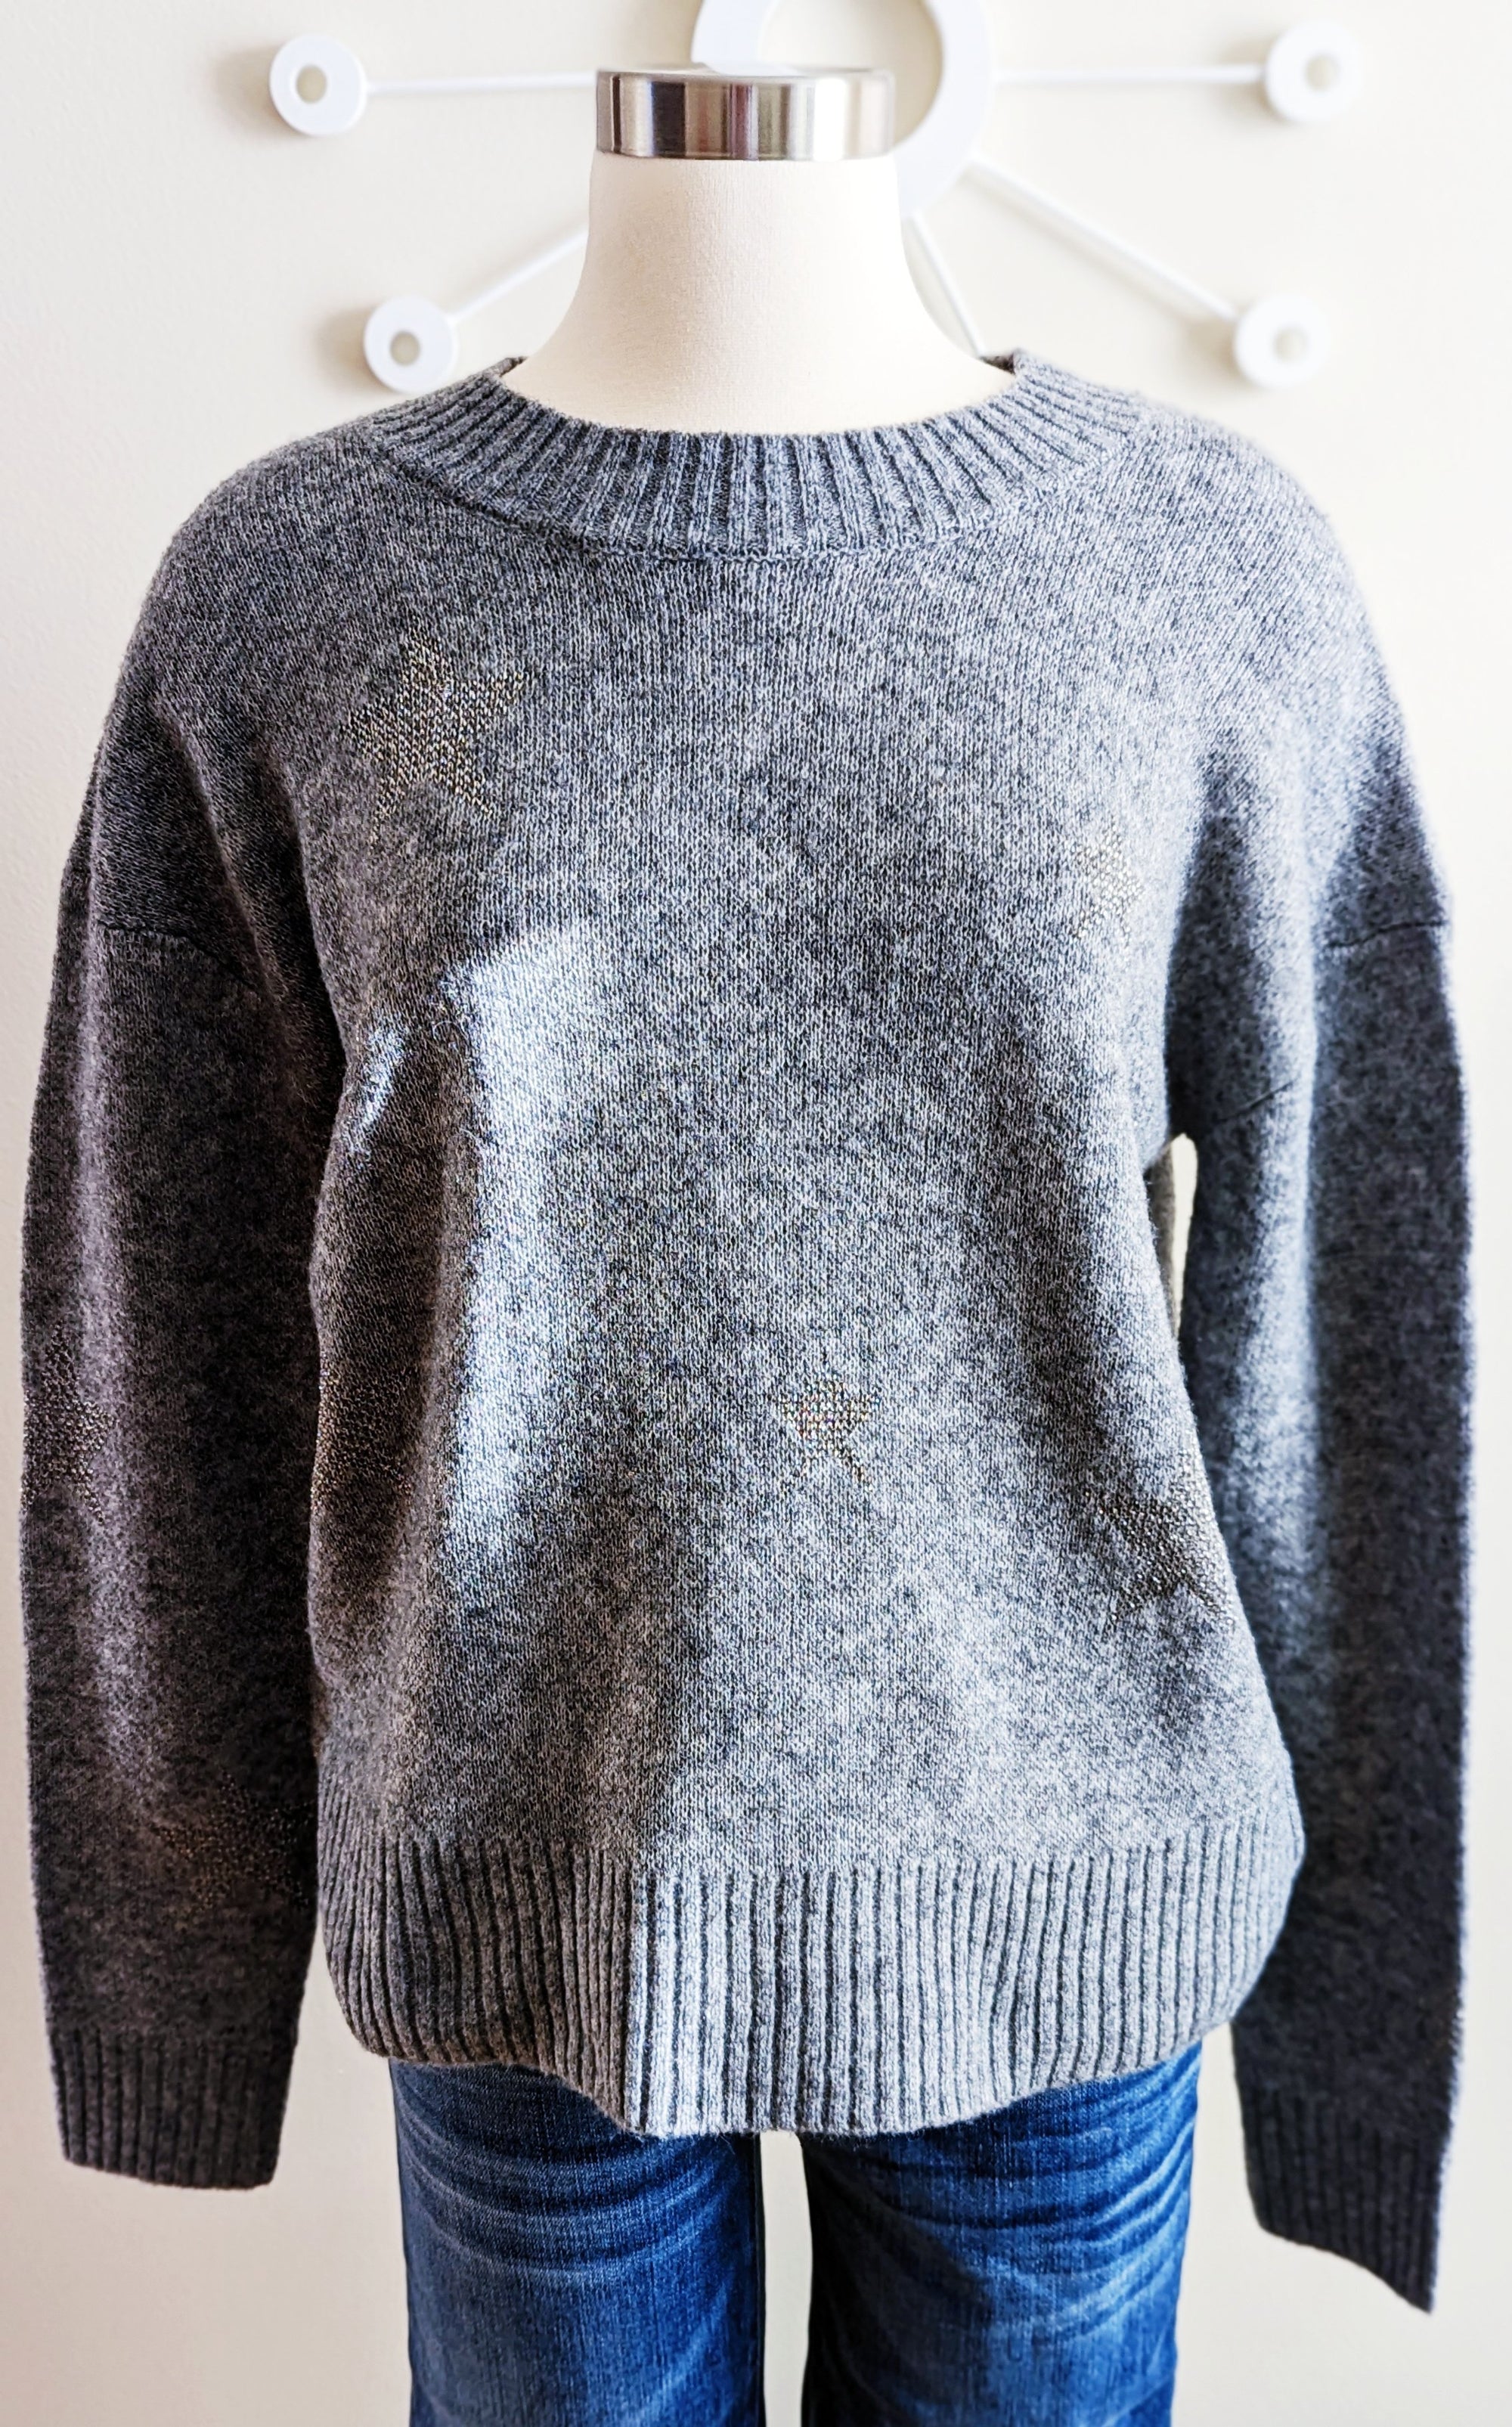 Sparkly Star Sweater